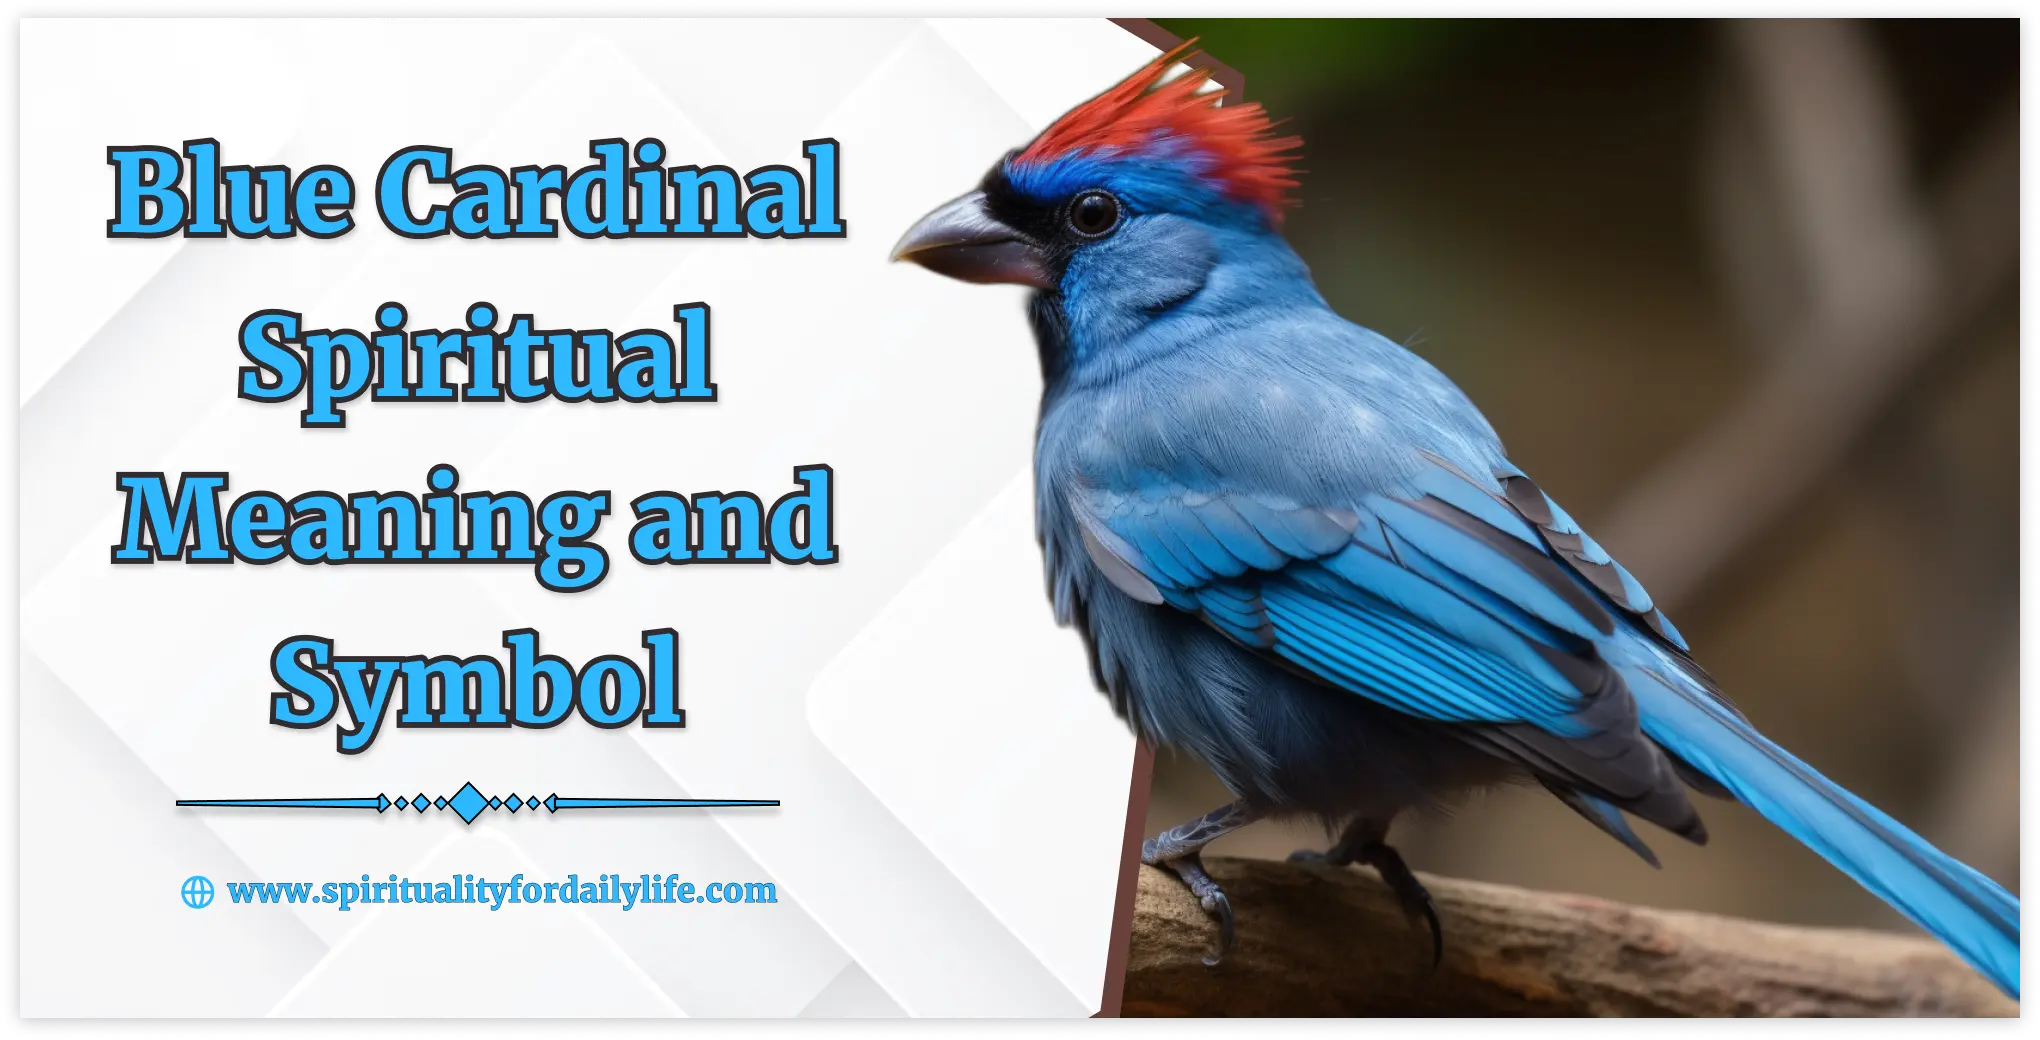 Blue Cardinal Spiritual Meaning and Symbol